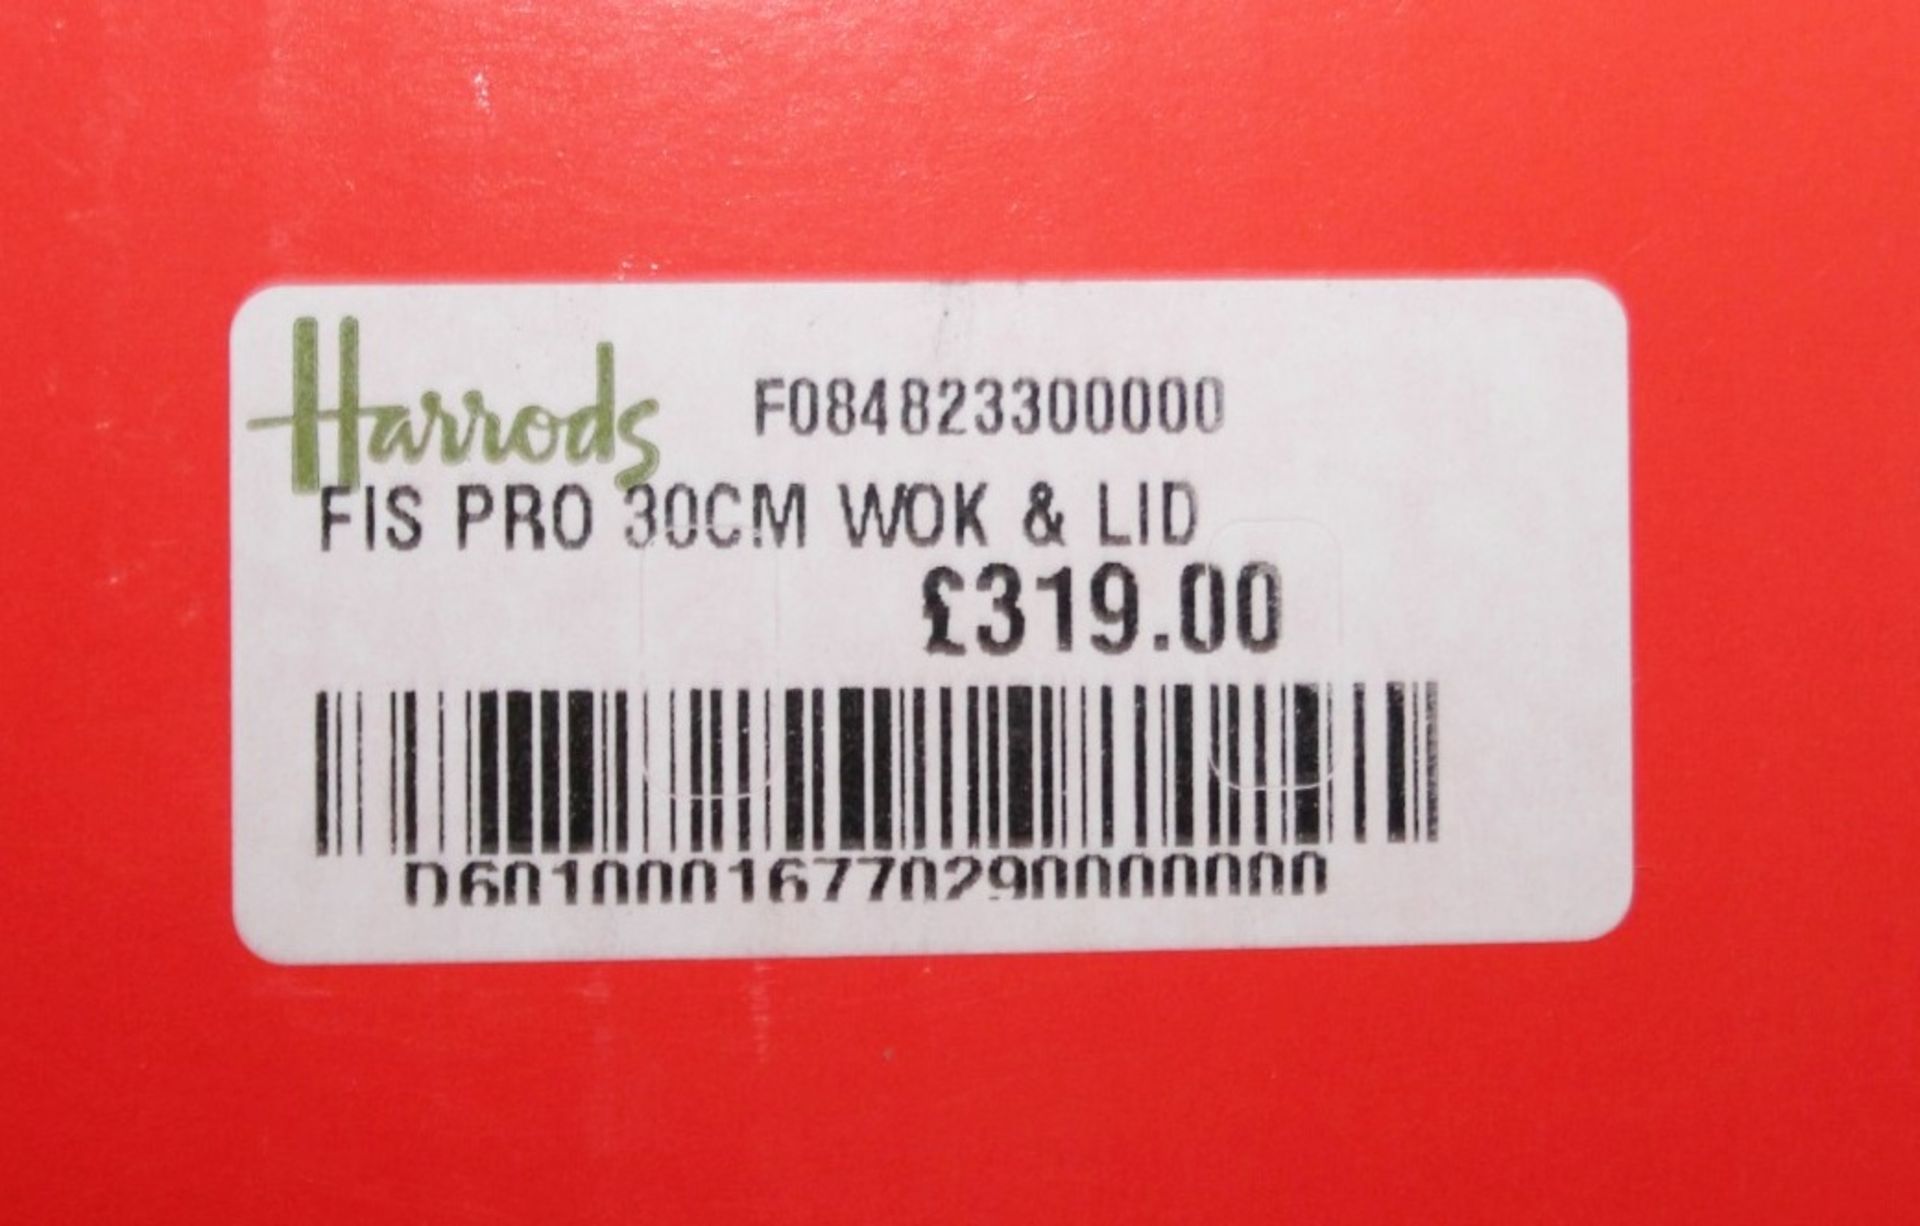 1 x FISSLER Original-Profi Wok with Metal Lid and Draining Rack (30cm) - Original Price £319.00 - Image 7 of 12